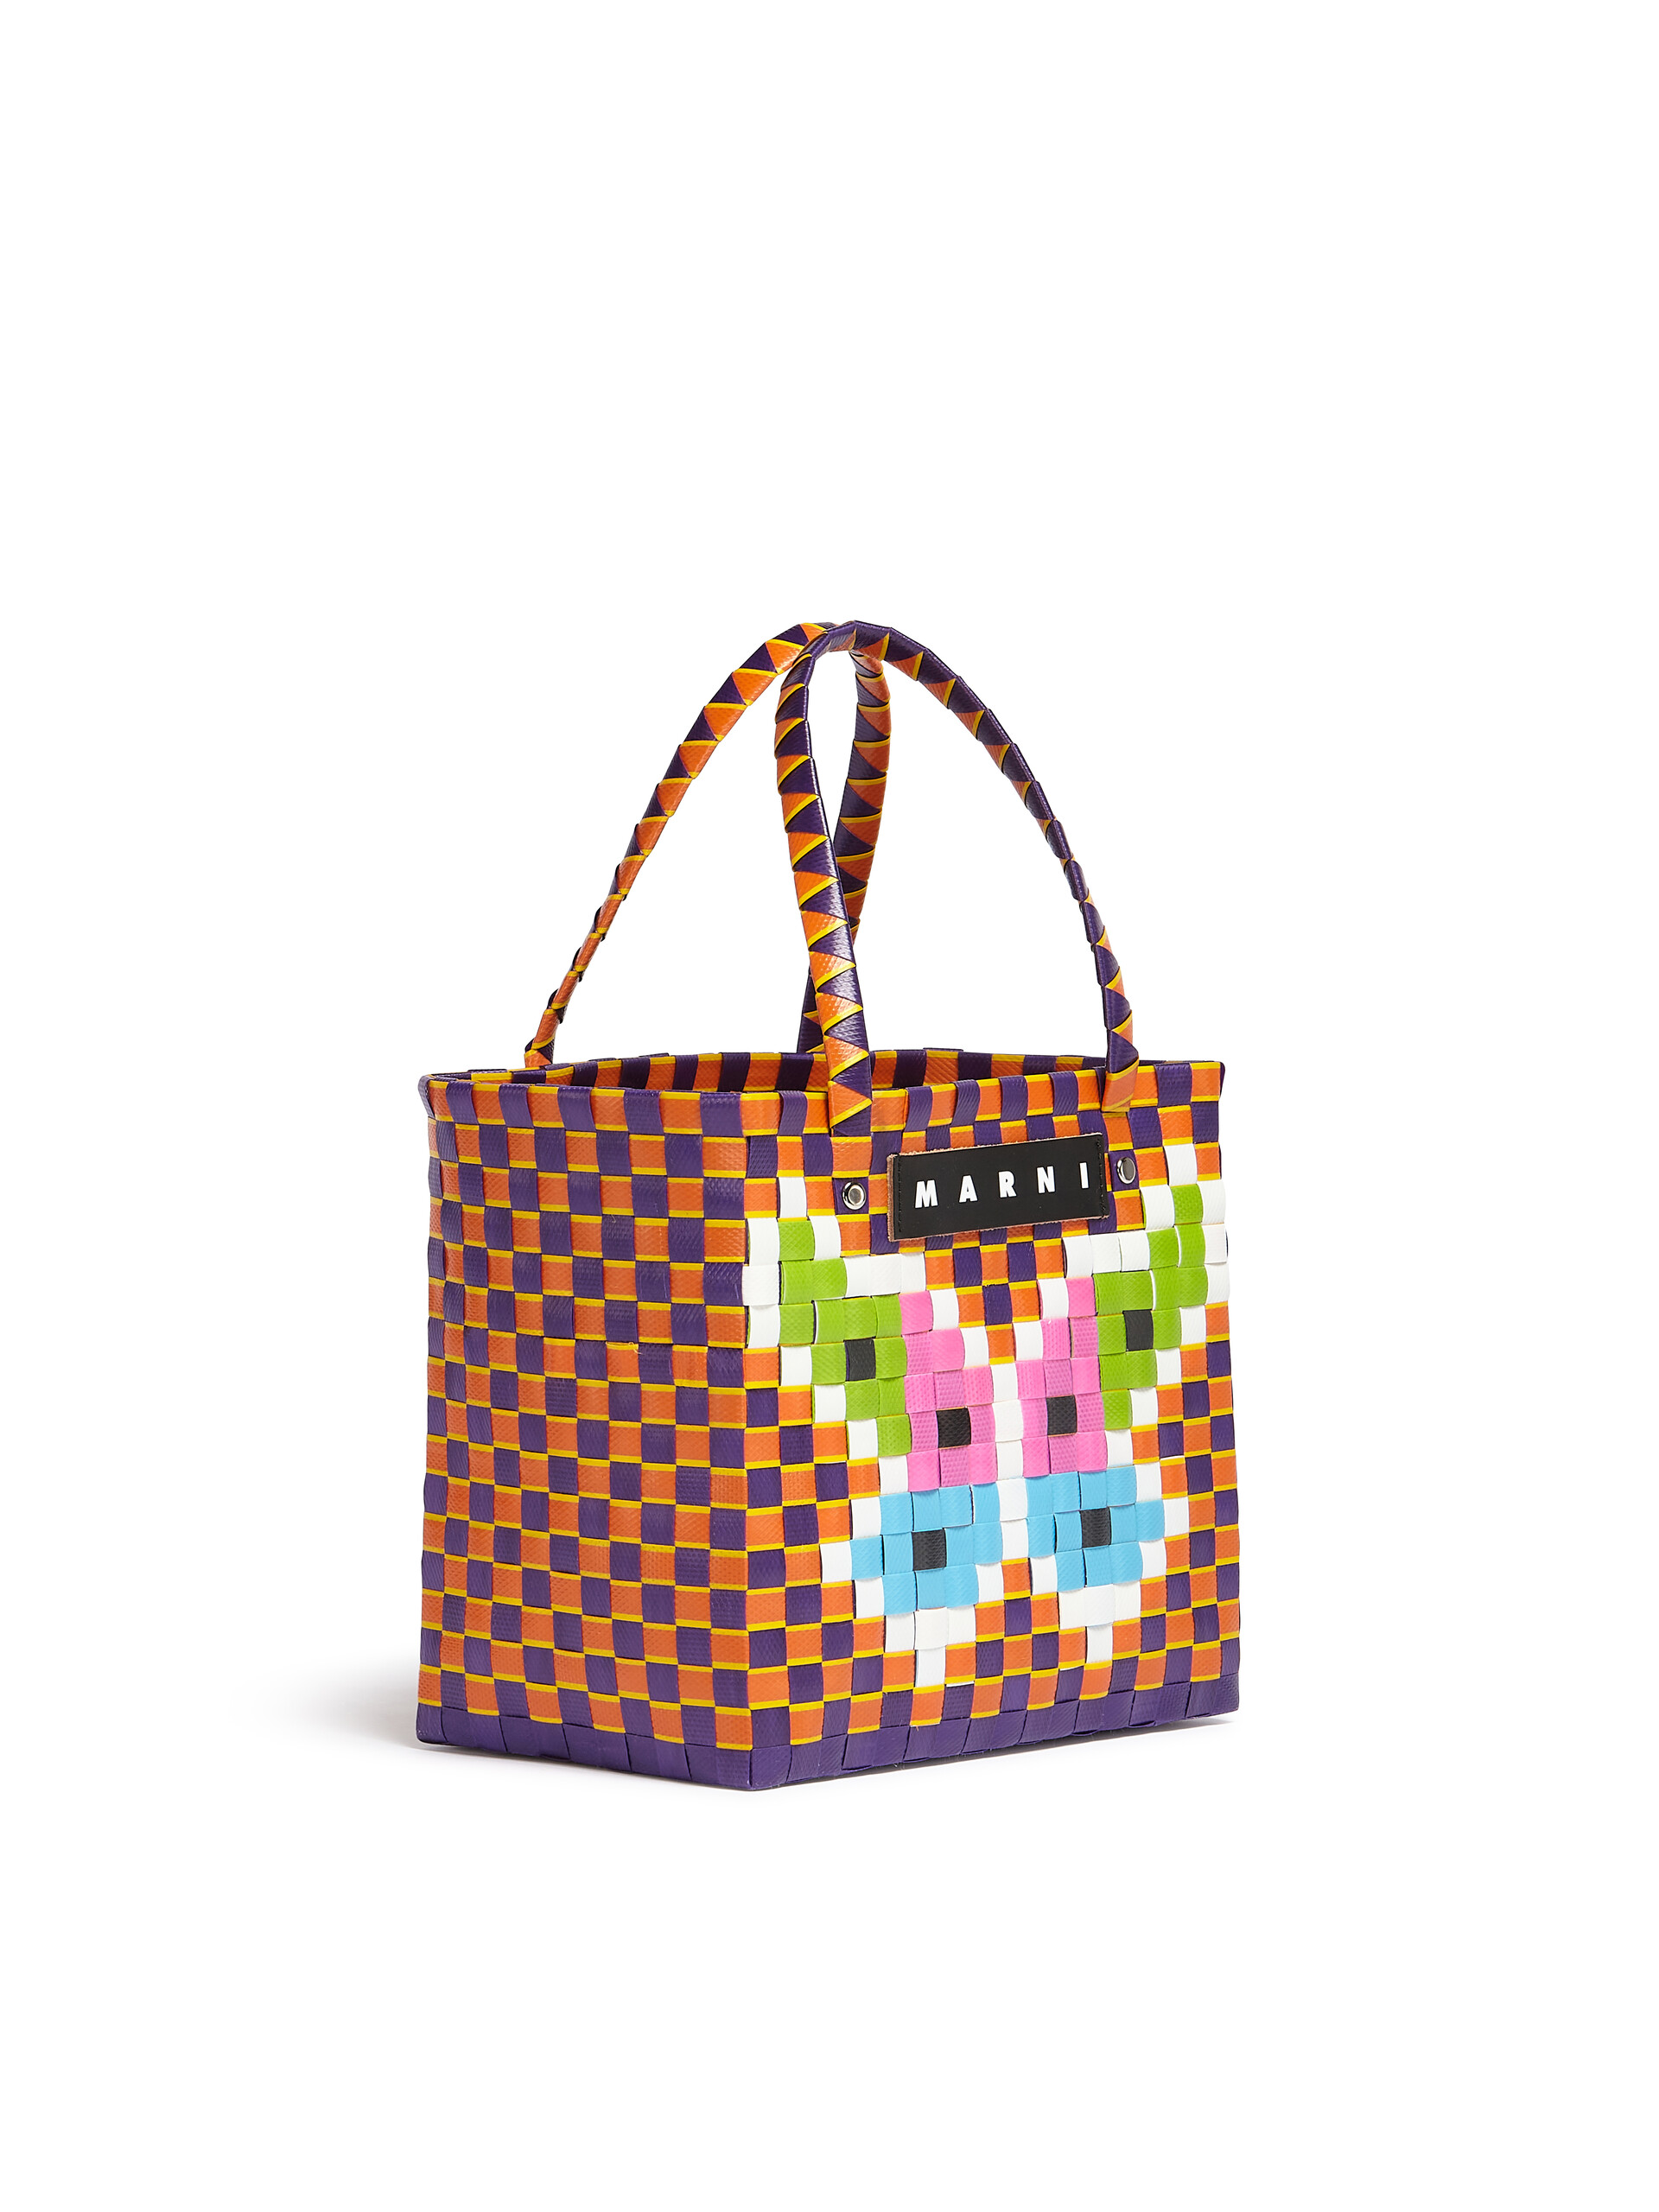 MARNI MARKET FLOWER MINI BASKET bag in orange butterfly motif - Shopping Bags - Image 2